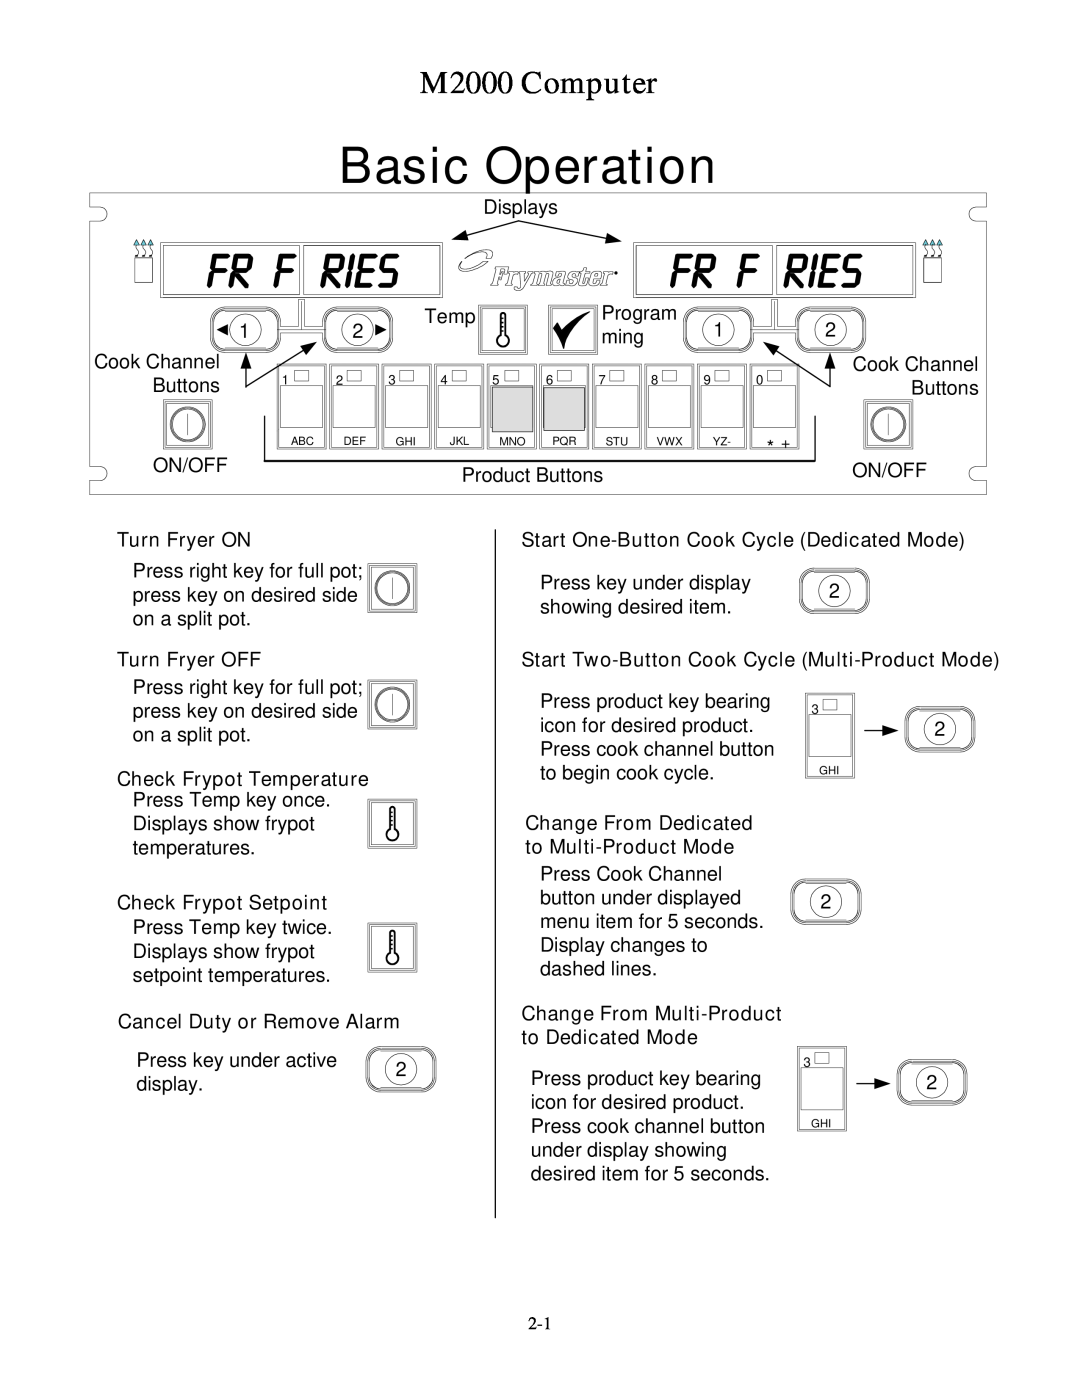 Frymaster operation manual M2000 Computer, Basic Operation, Fr F ries 